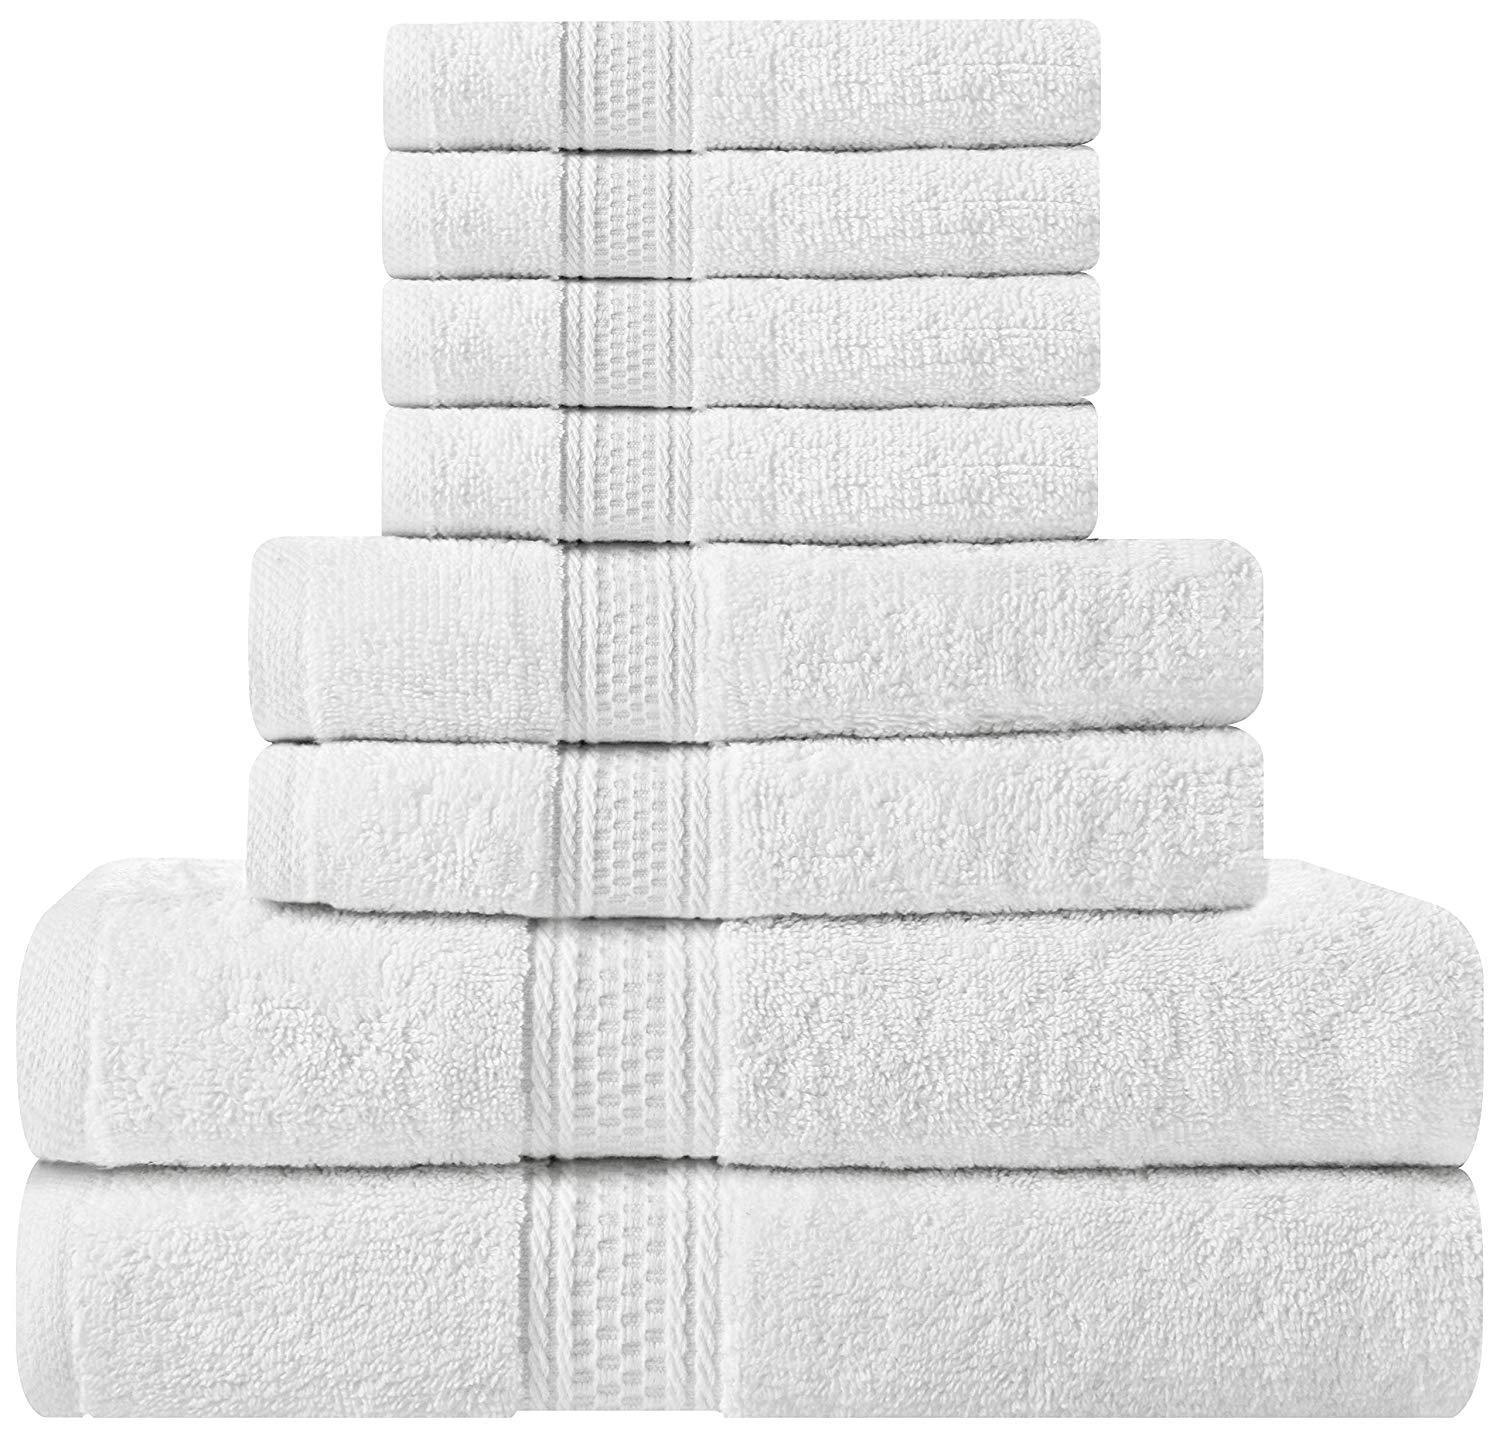 https://cdn.shopify.com/s/files/1/2059/3099/products/100-ring-spun-cotton-premium-8-piece-towel-sets-towel-sets-down-cotton-white-458841_1800x1800.jpg?v=1601581475